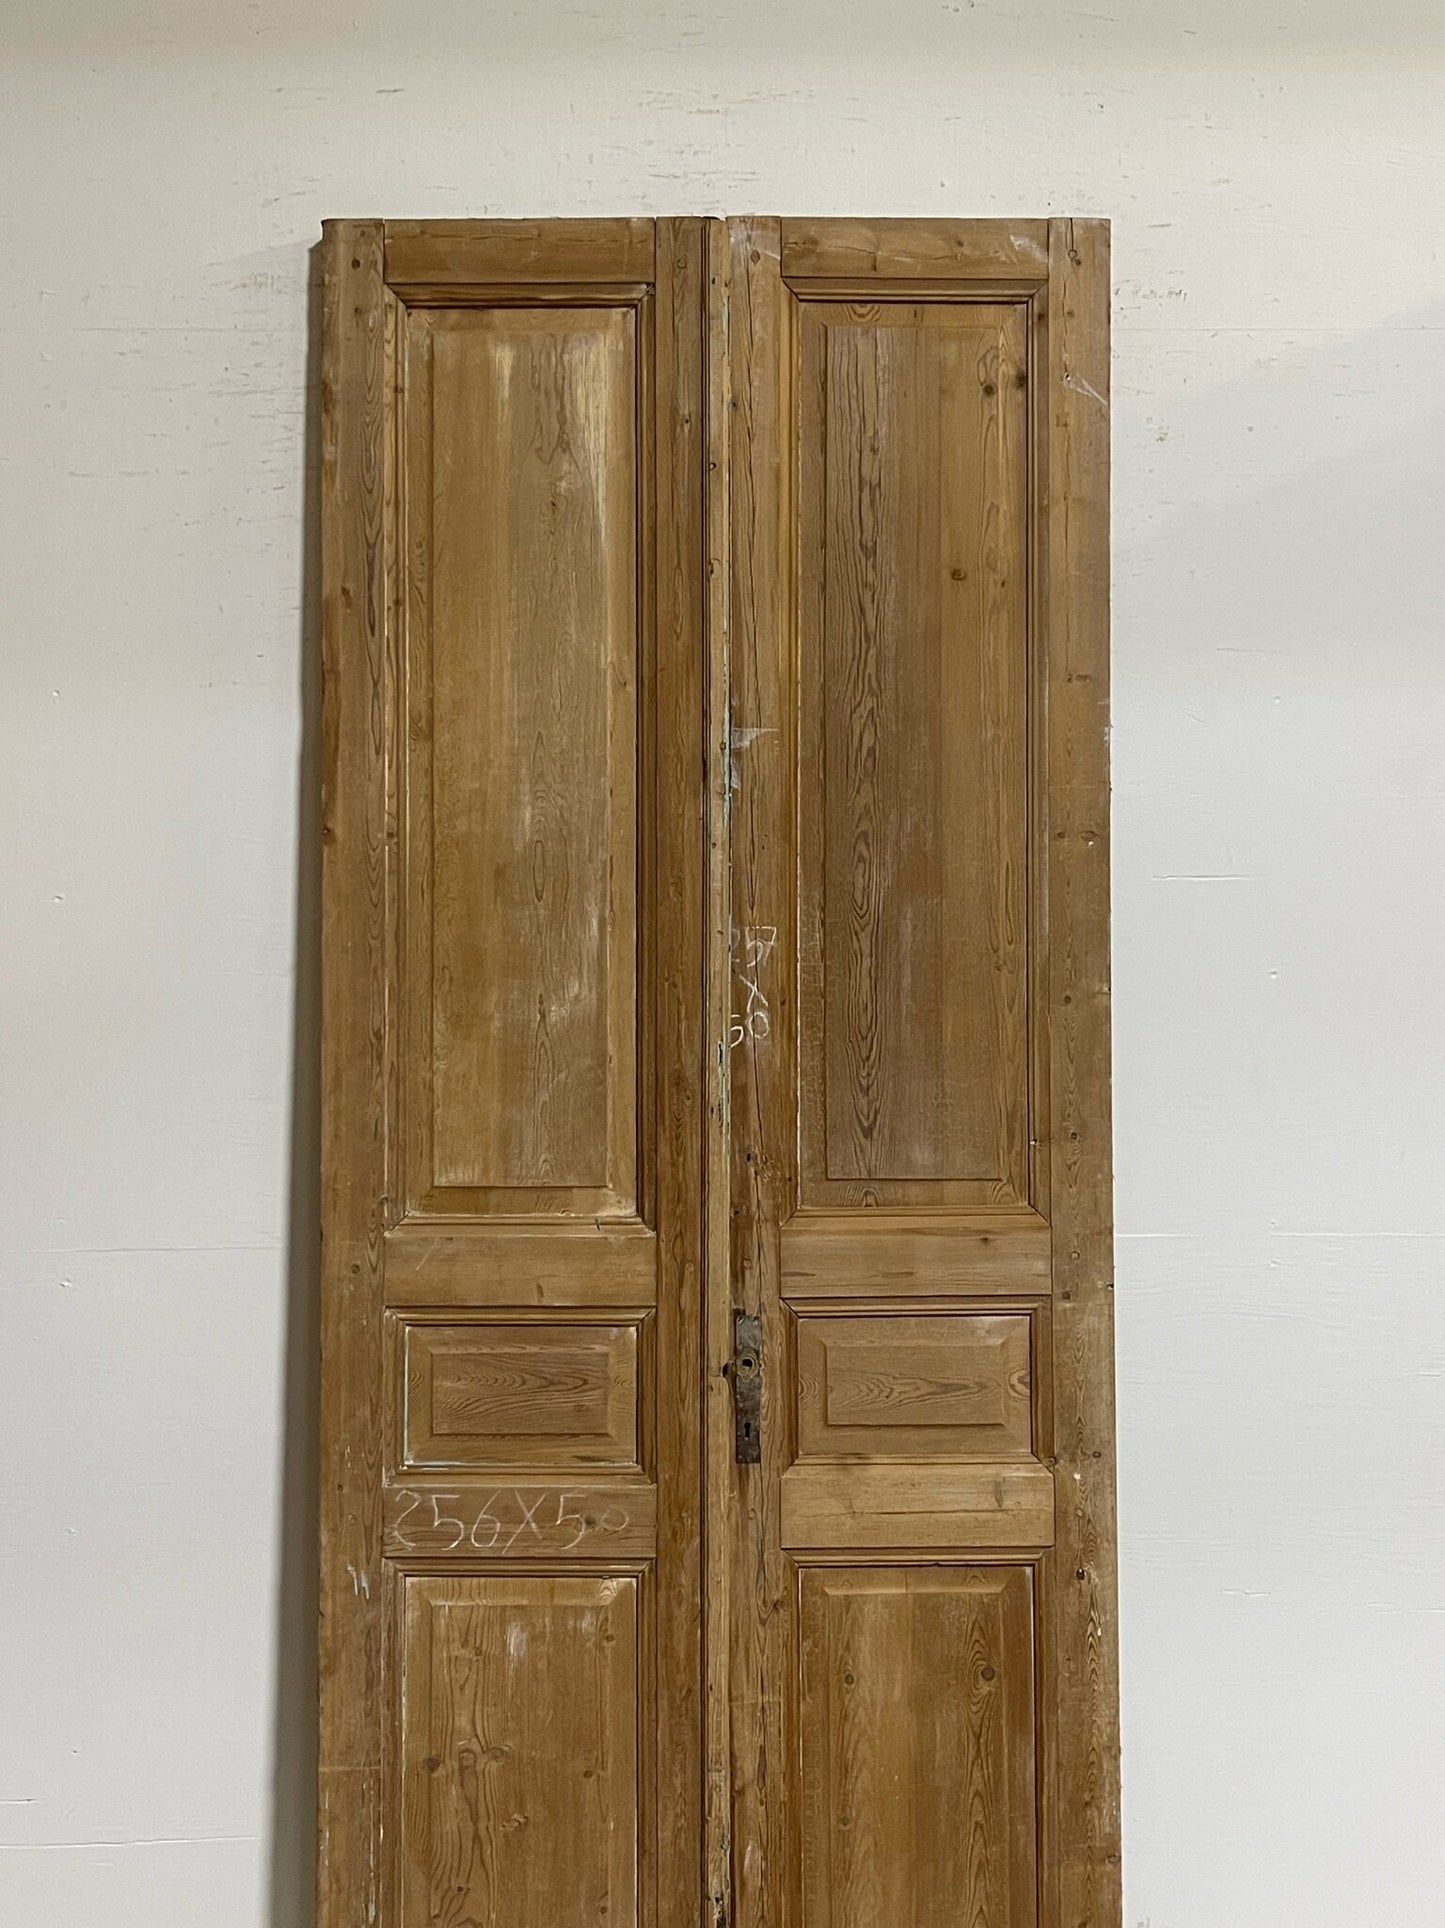 Antique French doors (100.75X40.25) G0114